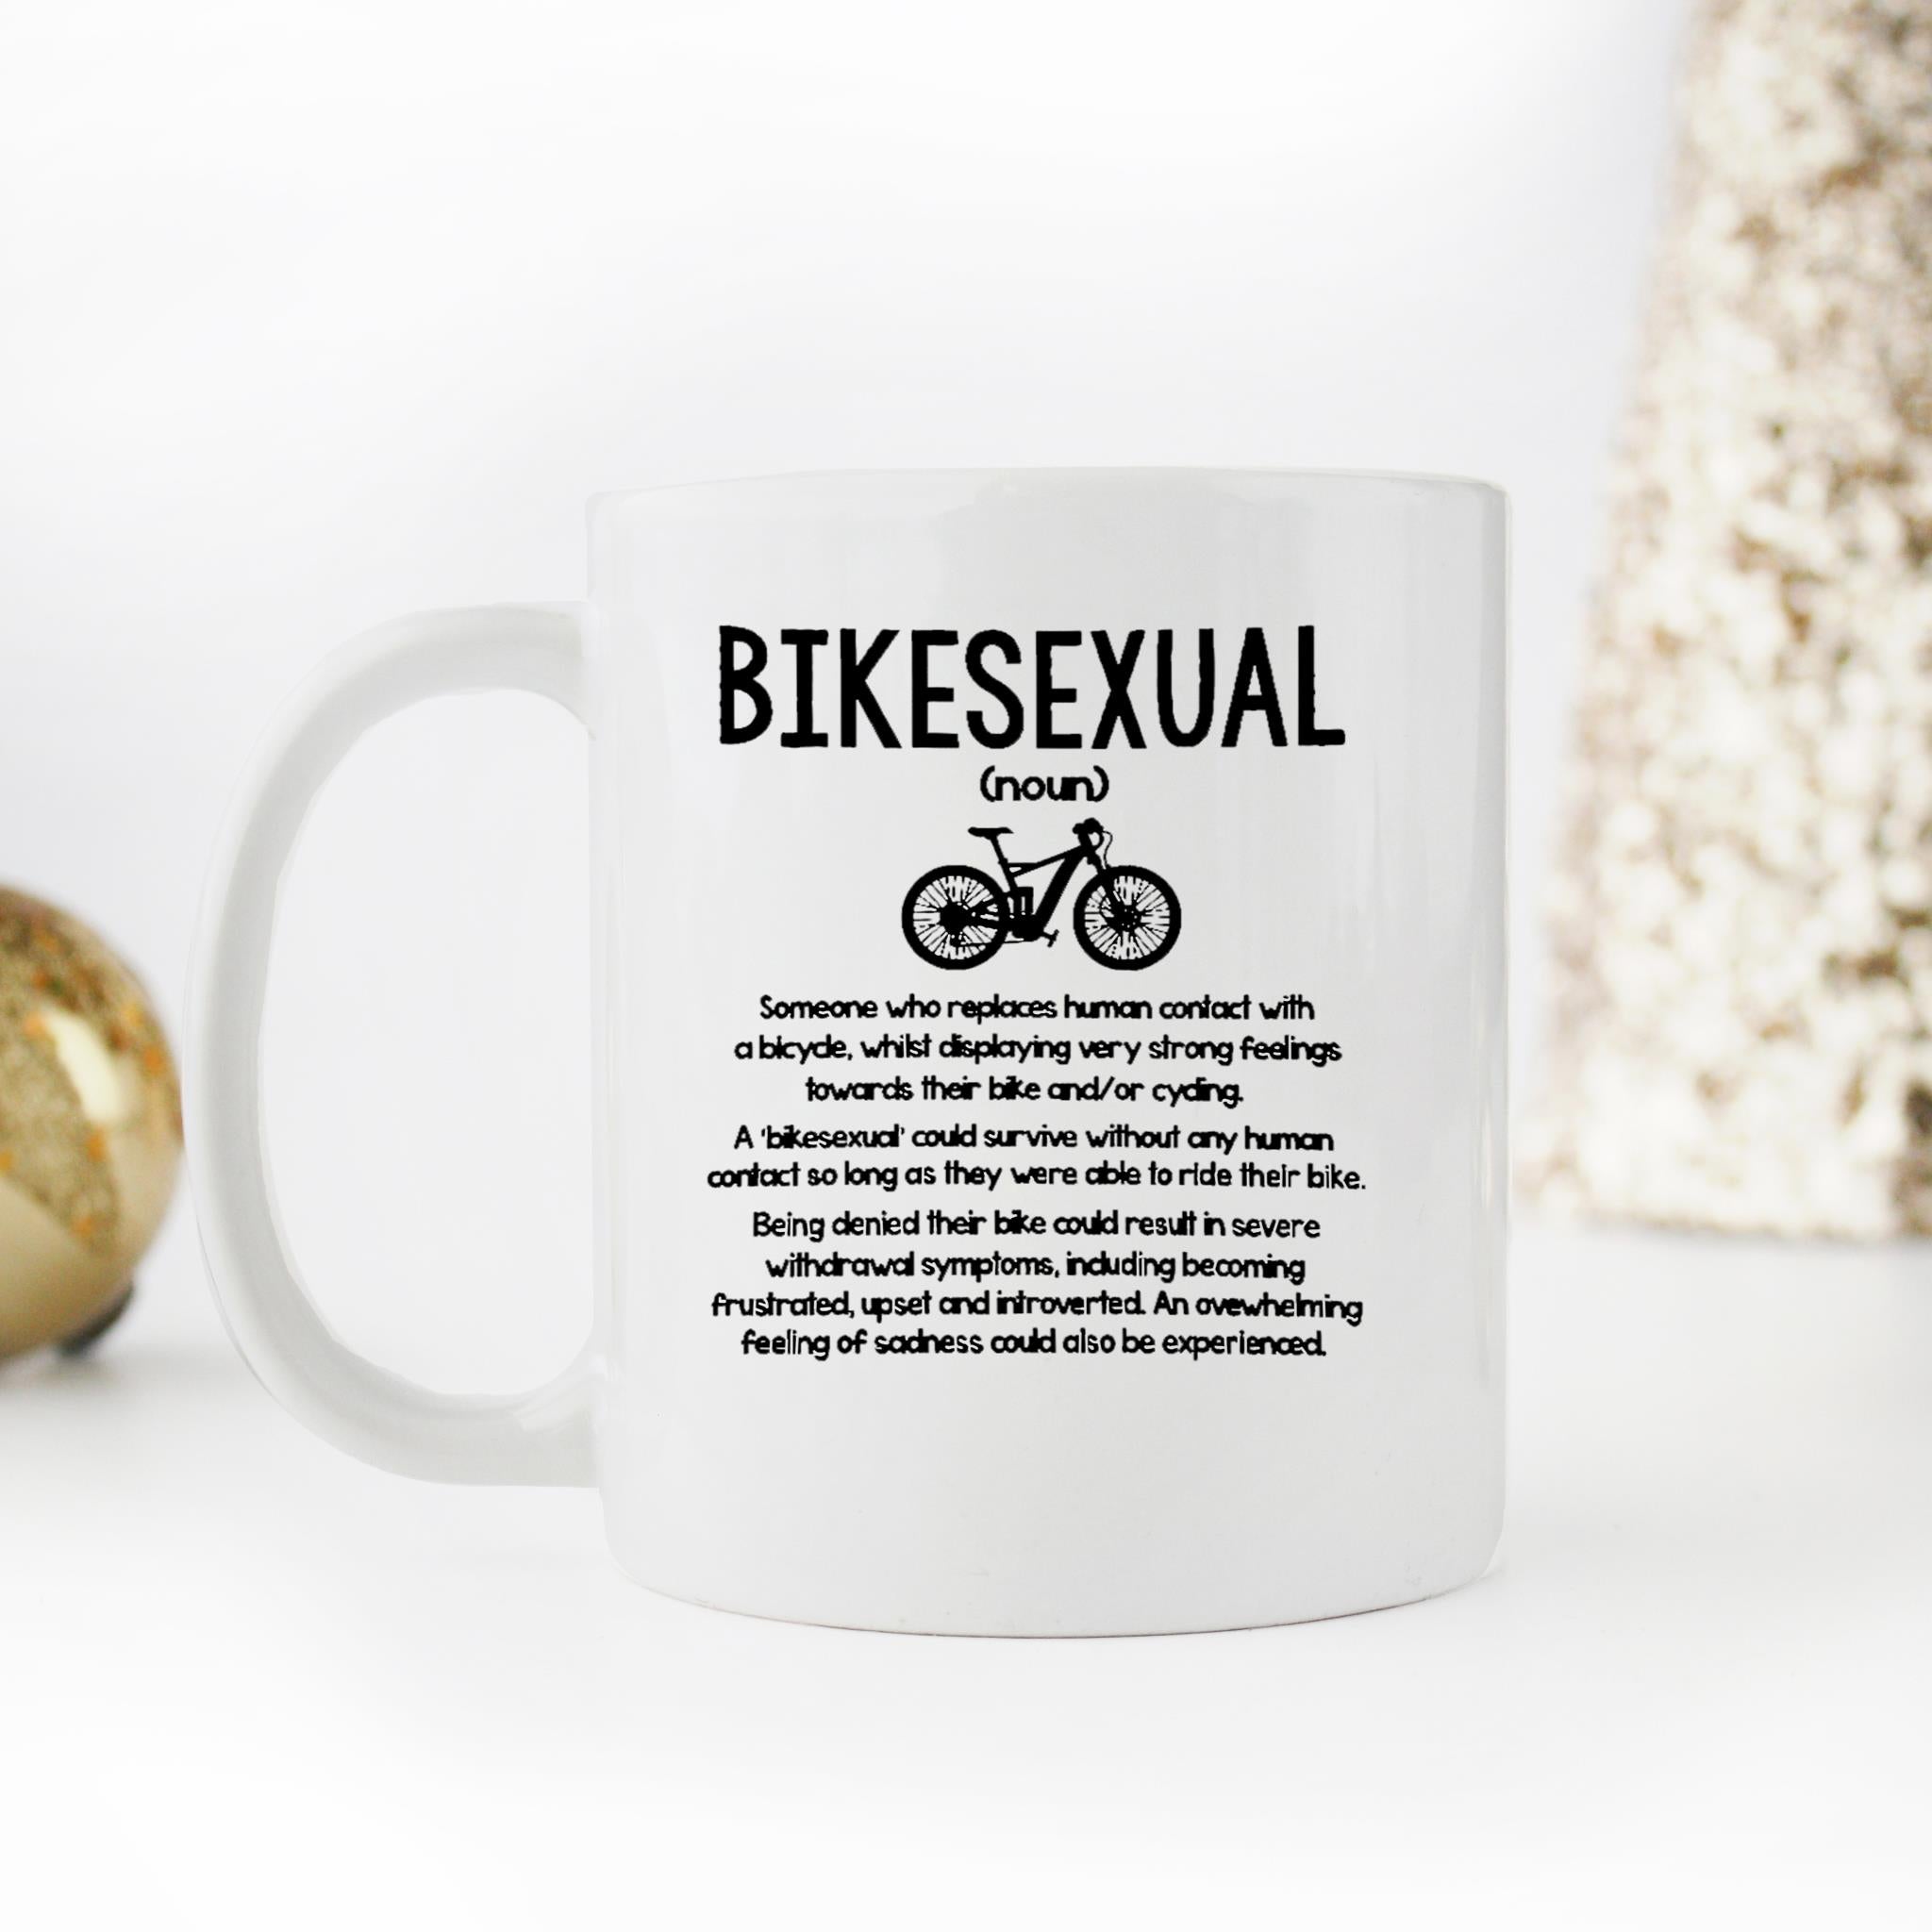 Skitongifts Funny Ceramic Novelty Coffee Mug Bikesexual Noun aqTb4jq